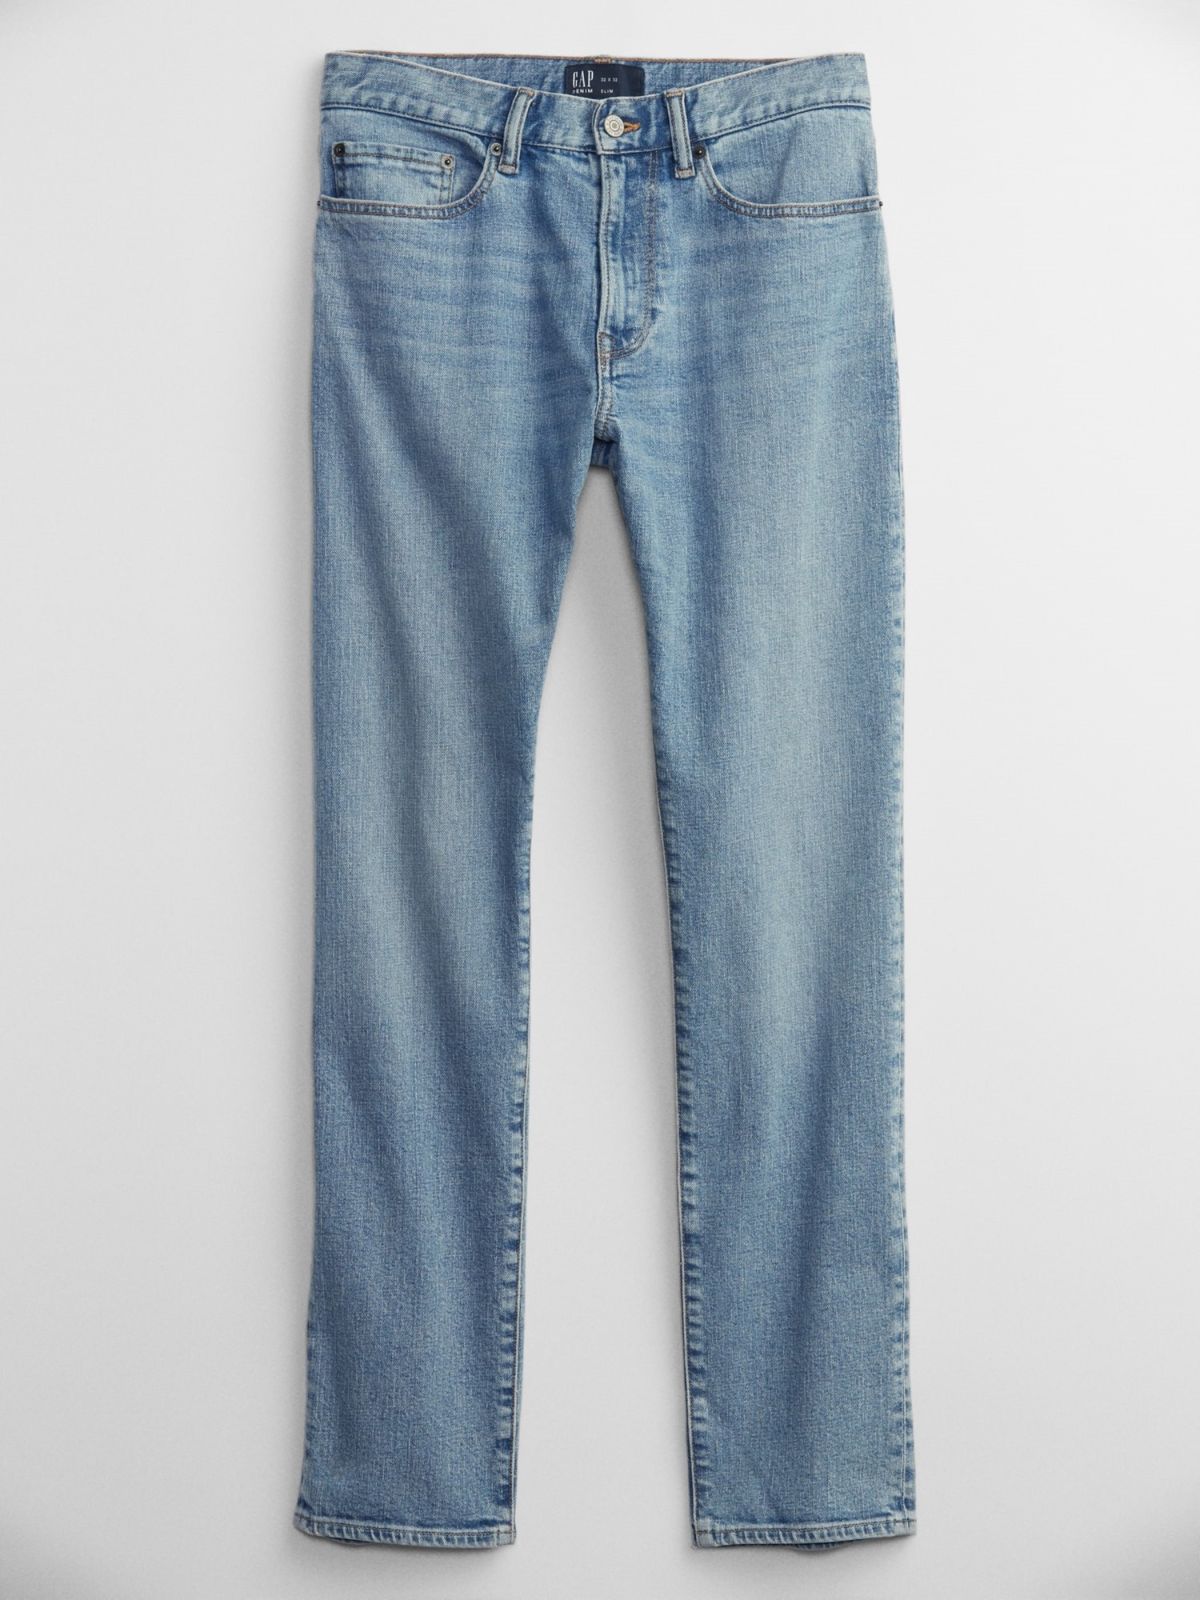  ג'ינס בגזרה ישרה של GAP